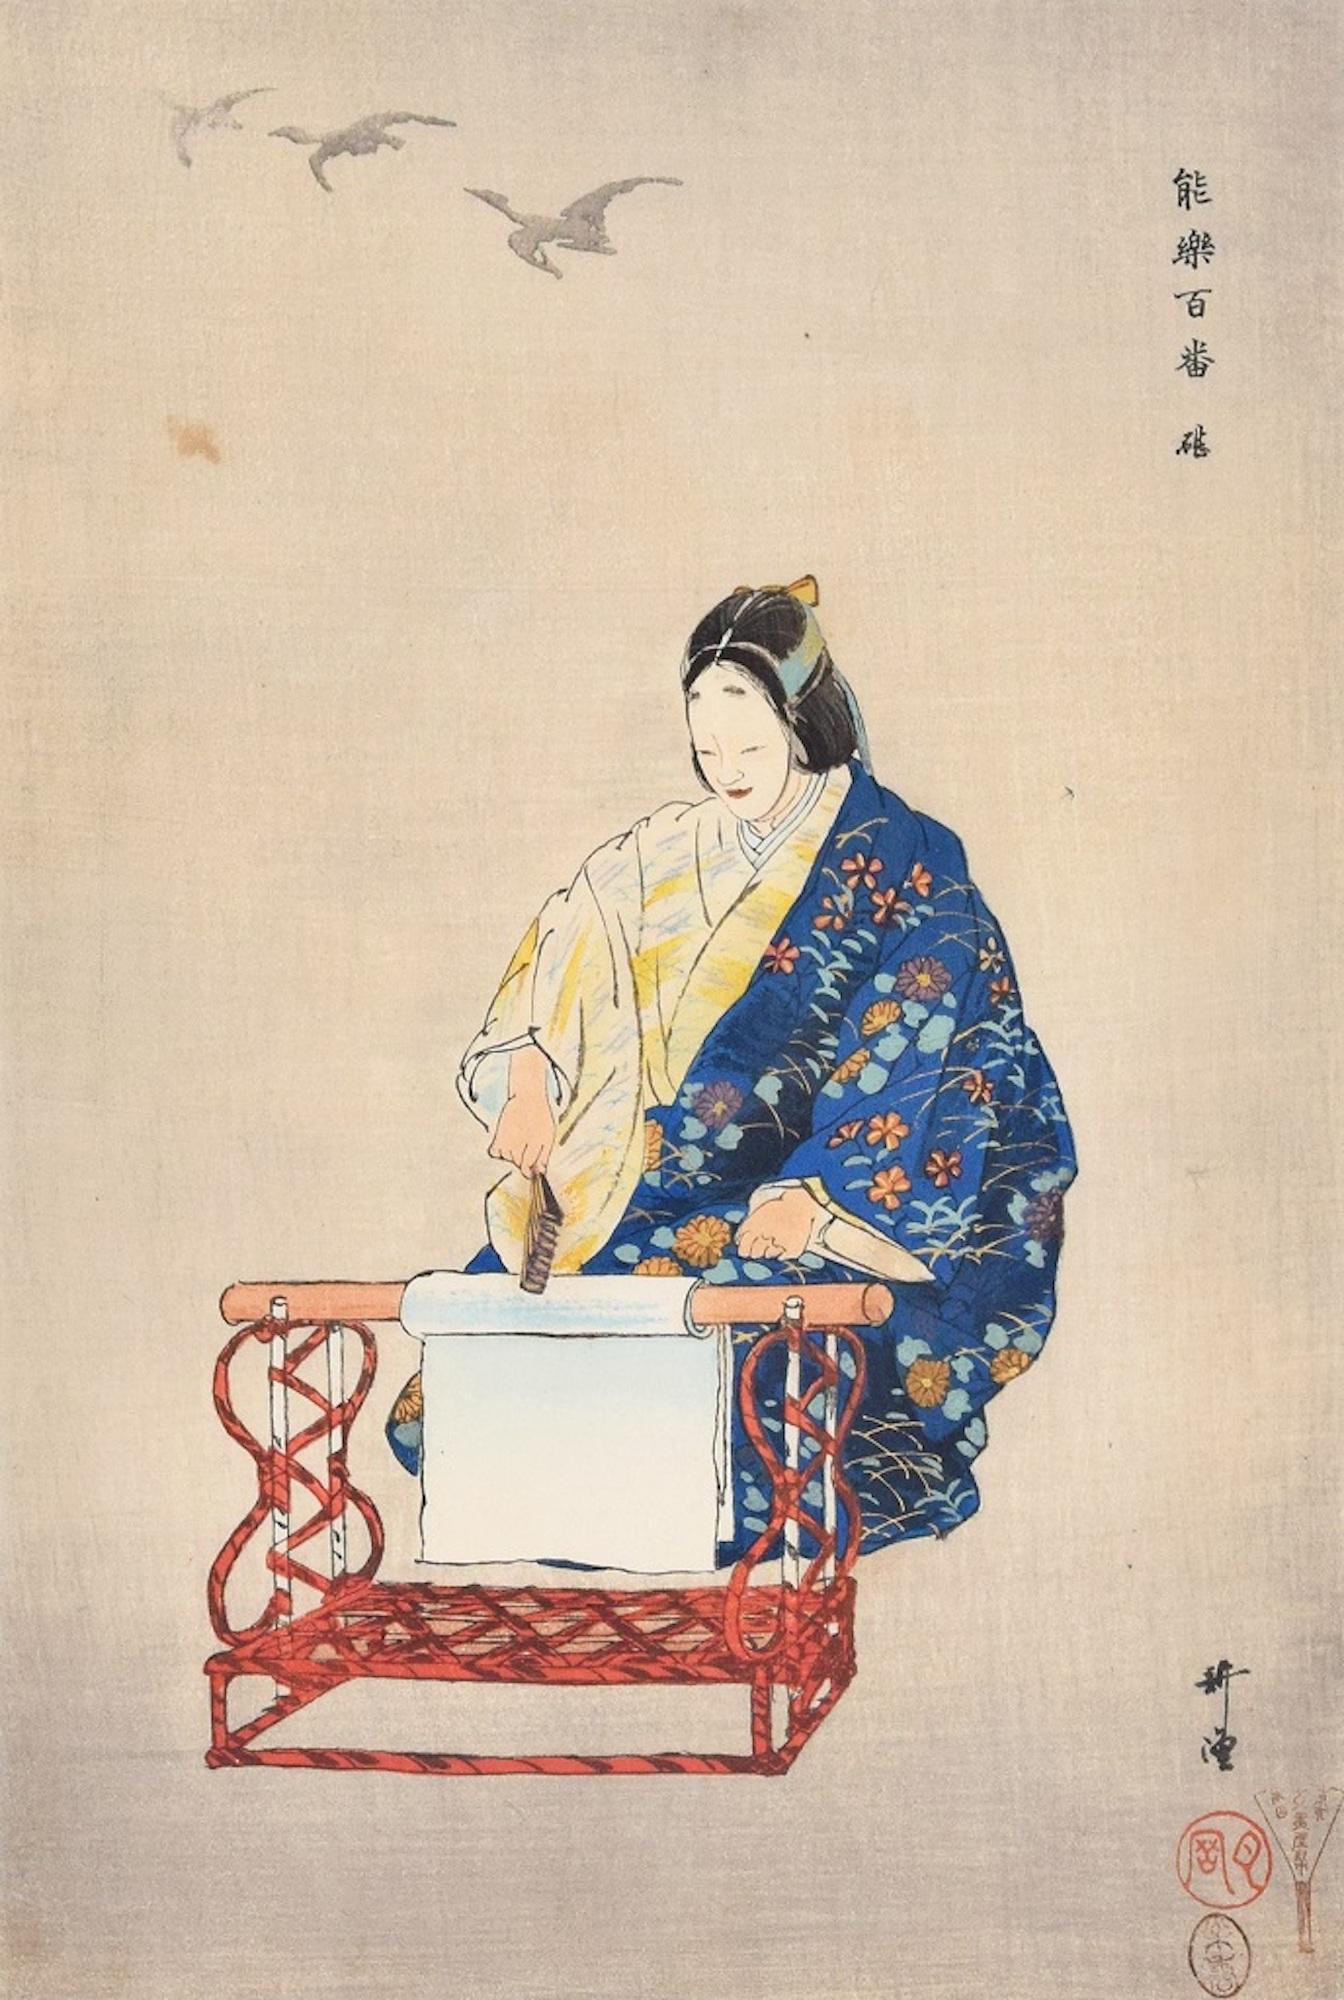 Kinuta - Original Woodcut Print by Tsukioka Kôgyo - 1922